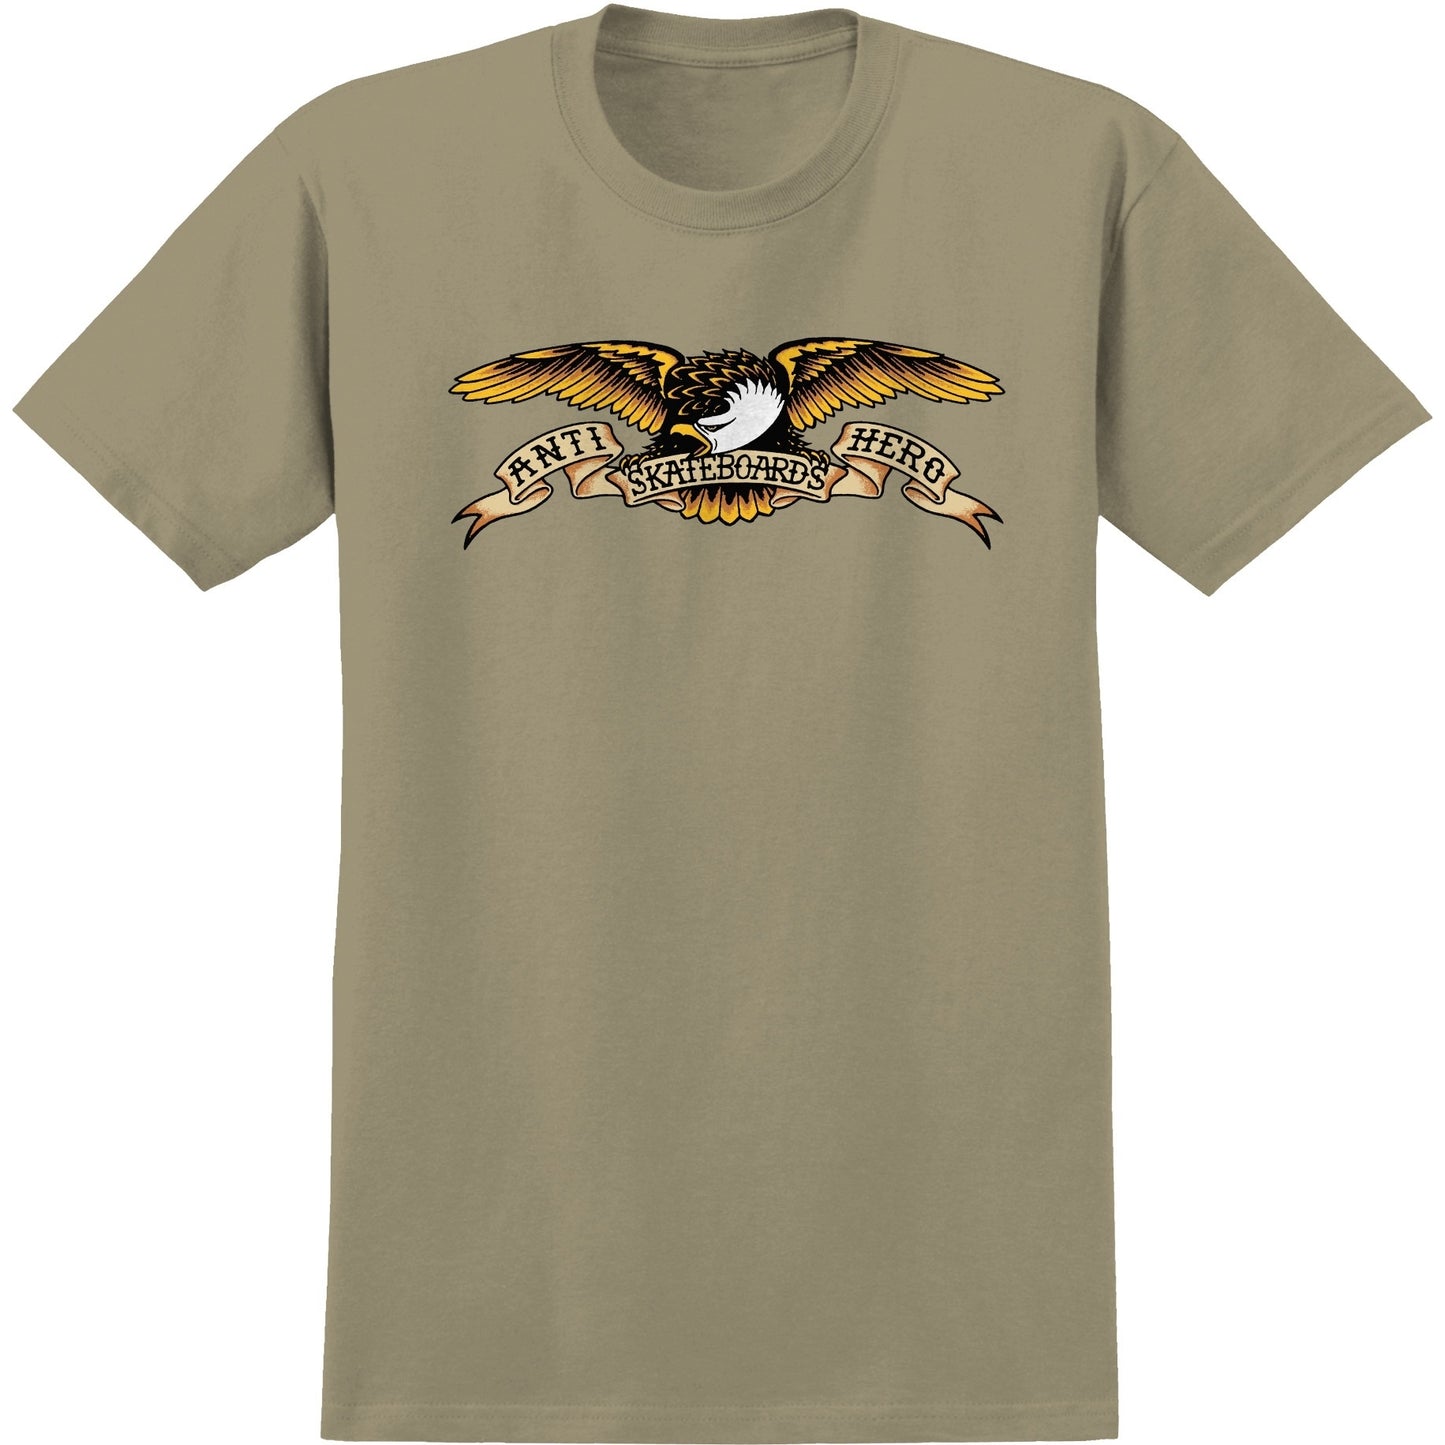 Anti-Hero Skateboards Eagle T-Shirt - Sand / Brown